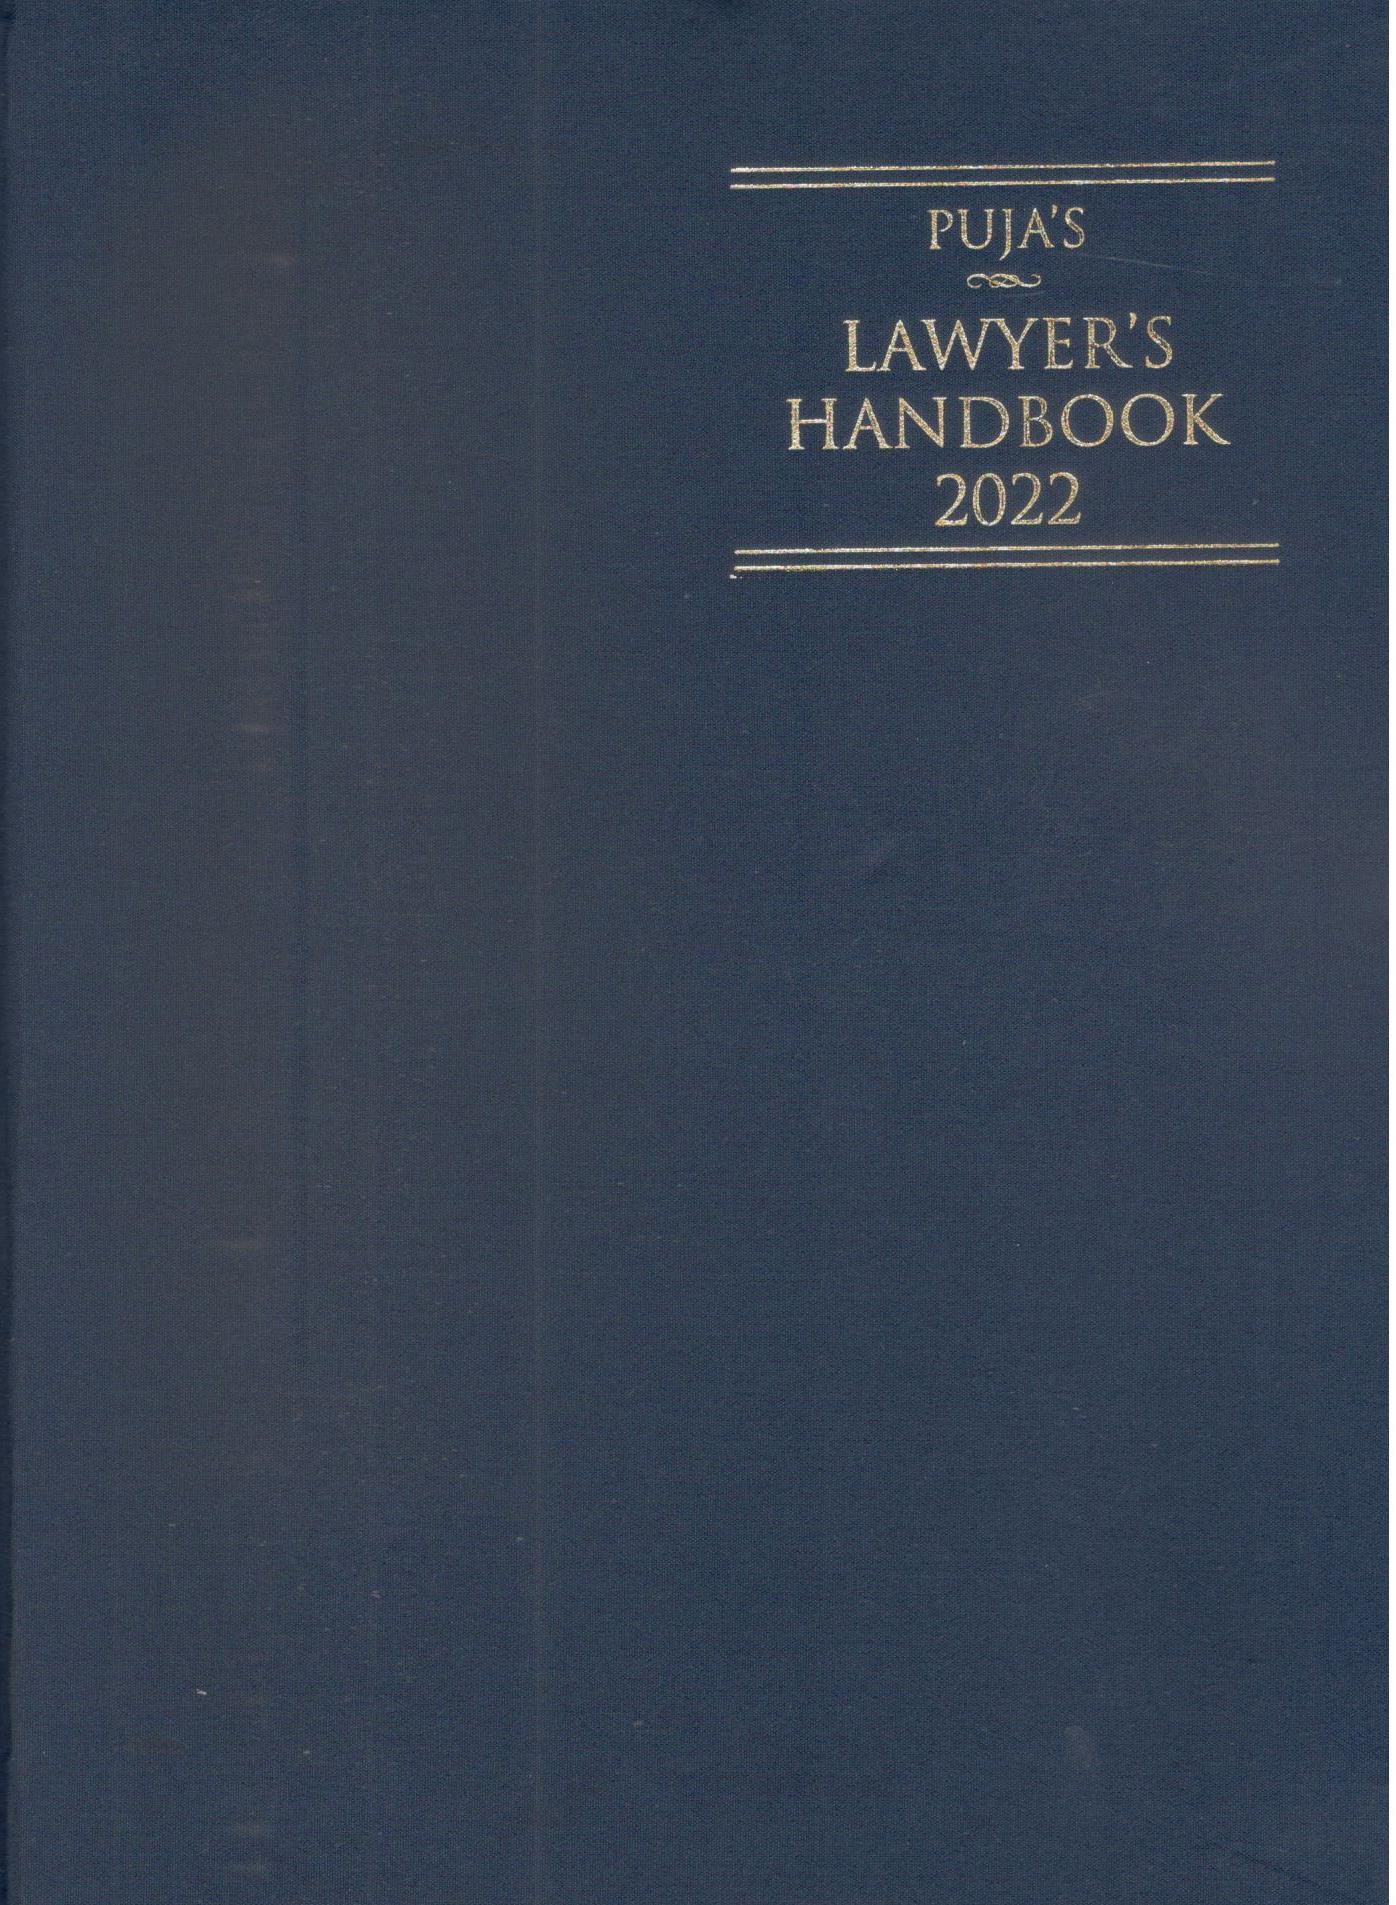  Buy Puja’s Lawyer’s Handbook 2022 - Blue Big Size Hardbound